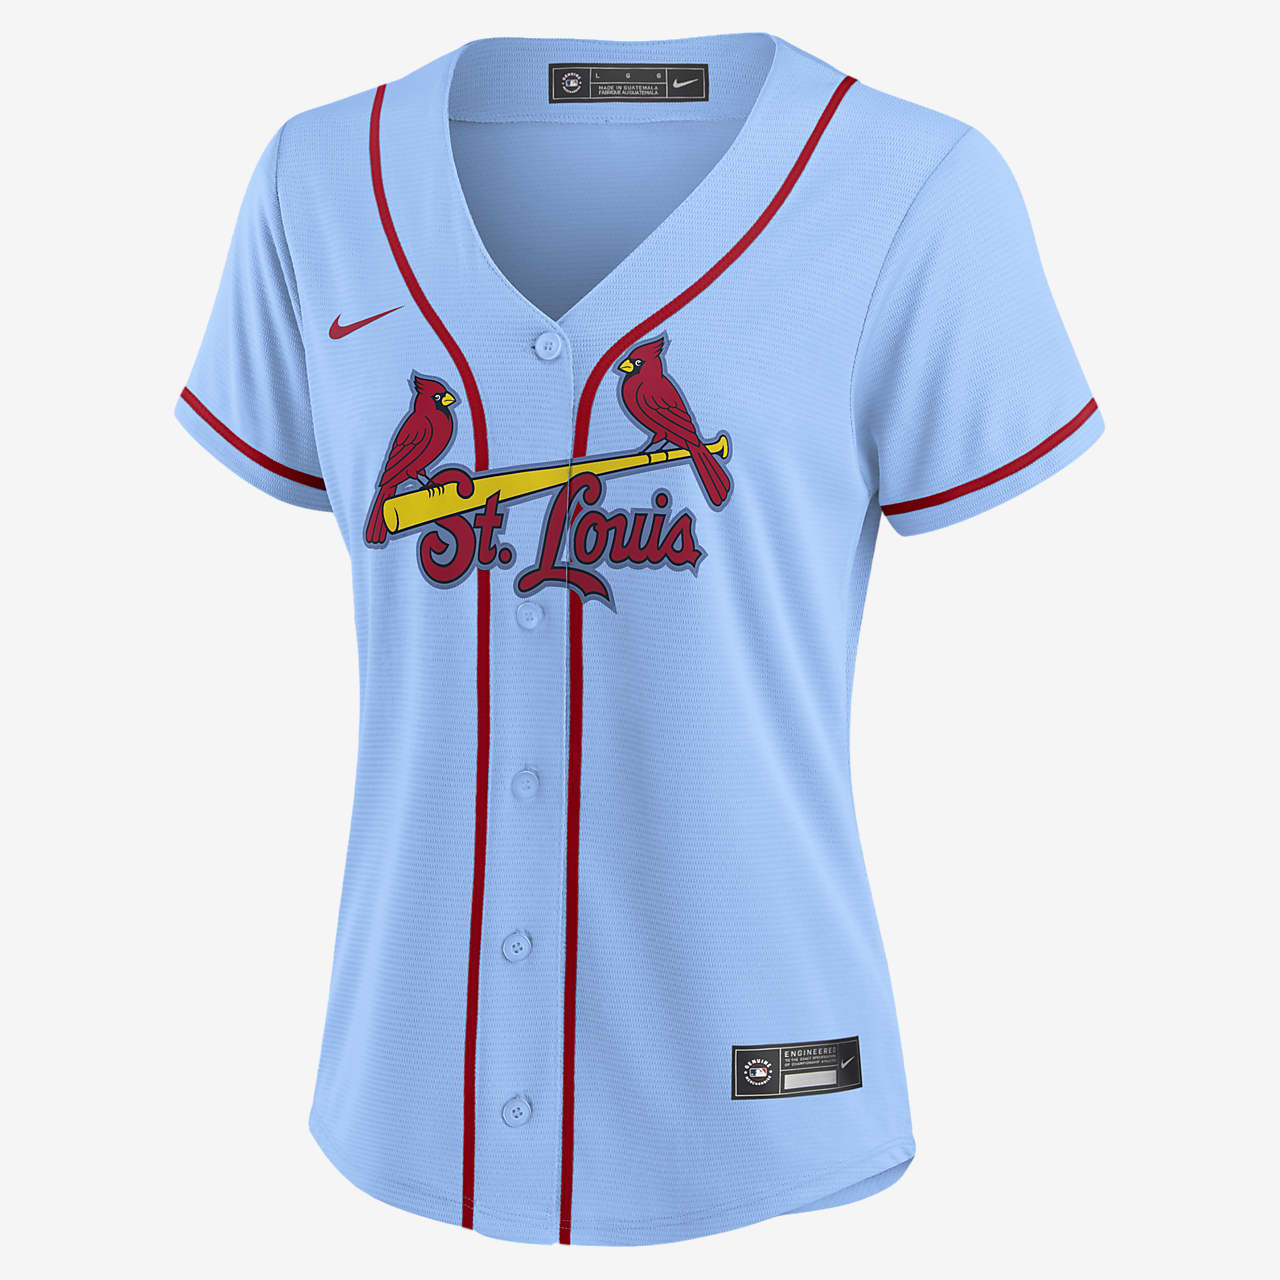 cardinals baseball jerseys for sale